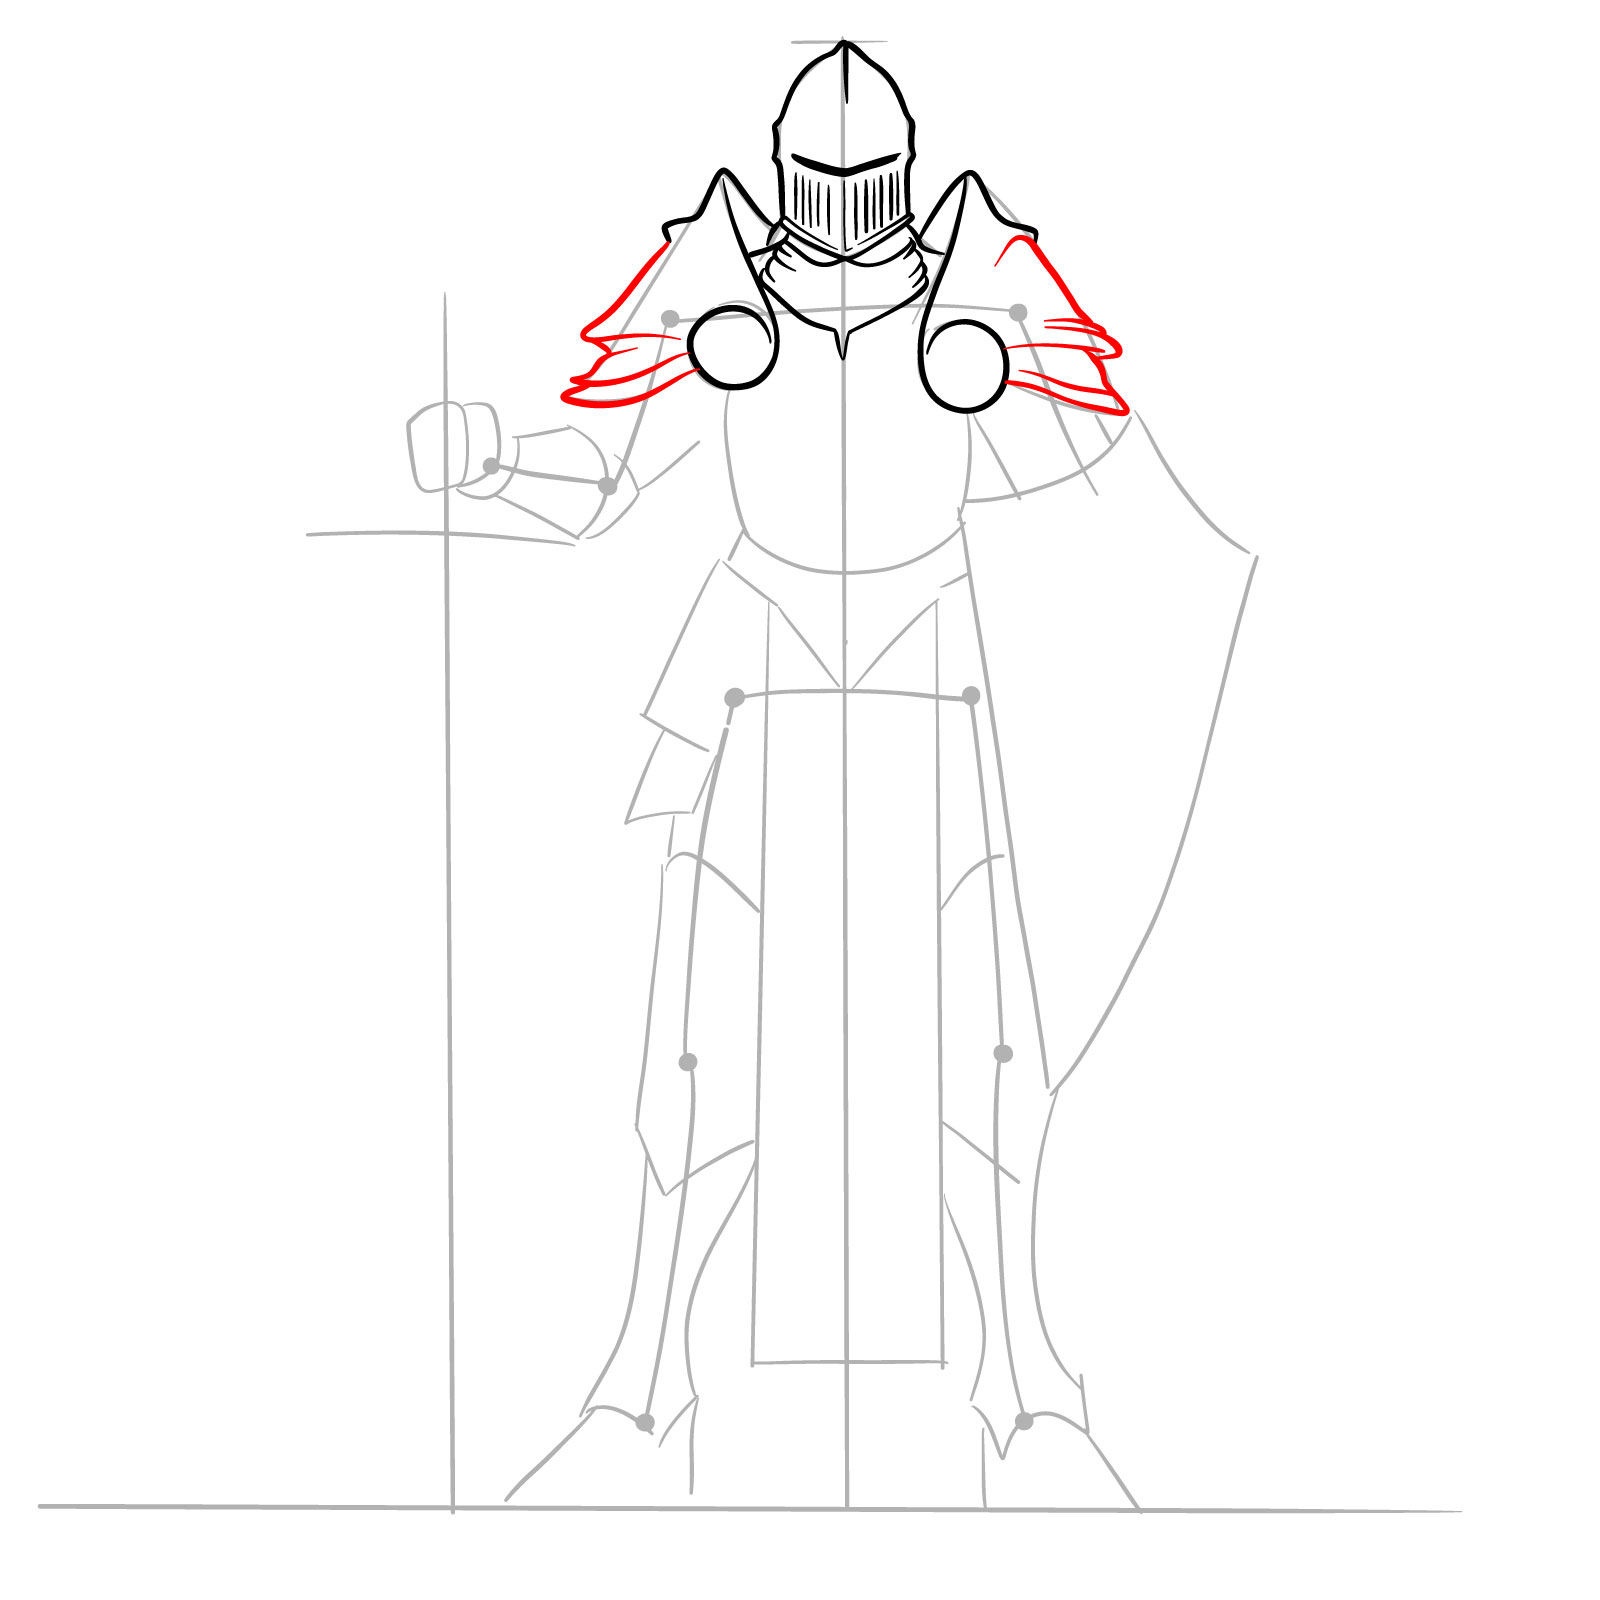 Paladin drawing step 8: finishing shoulder armor